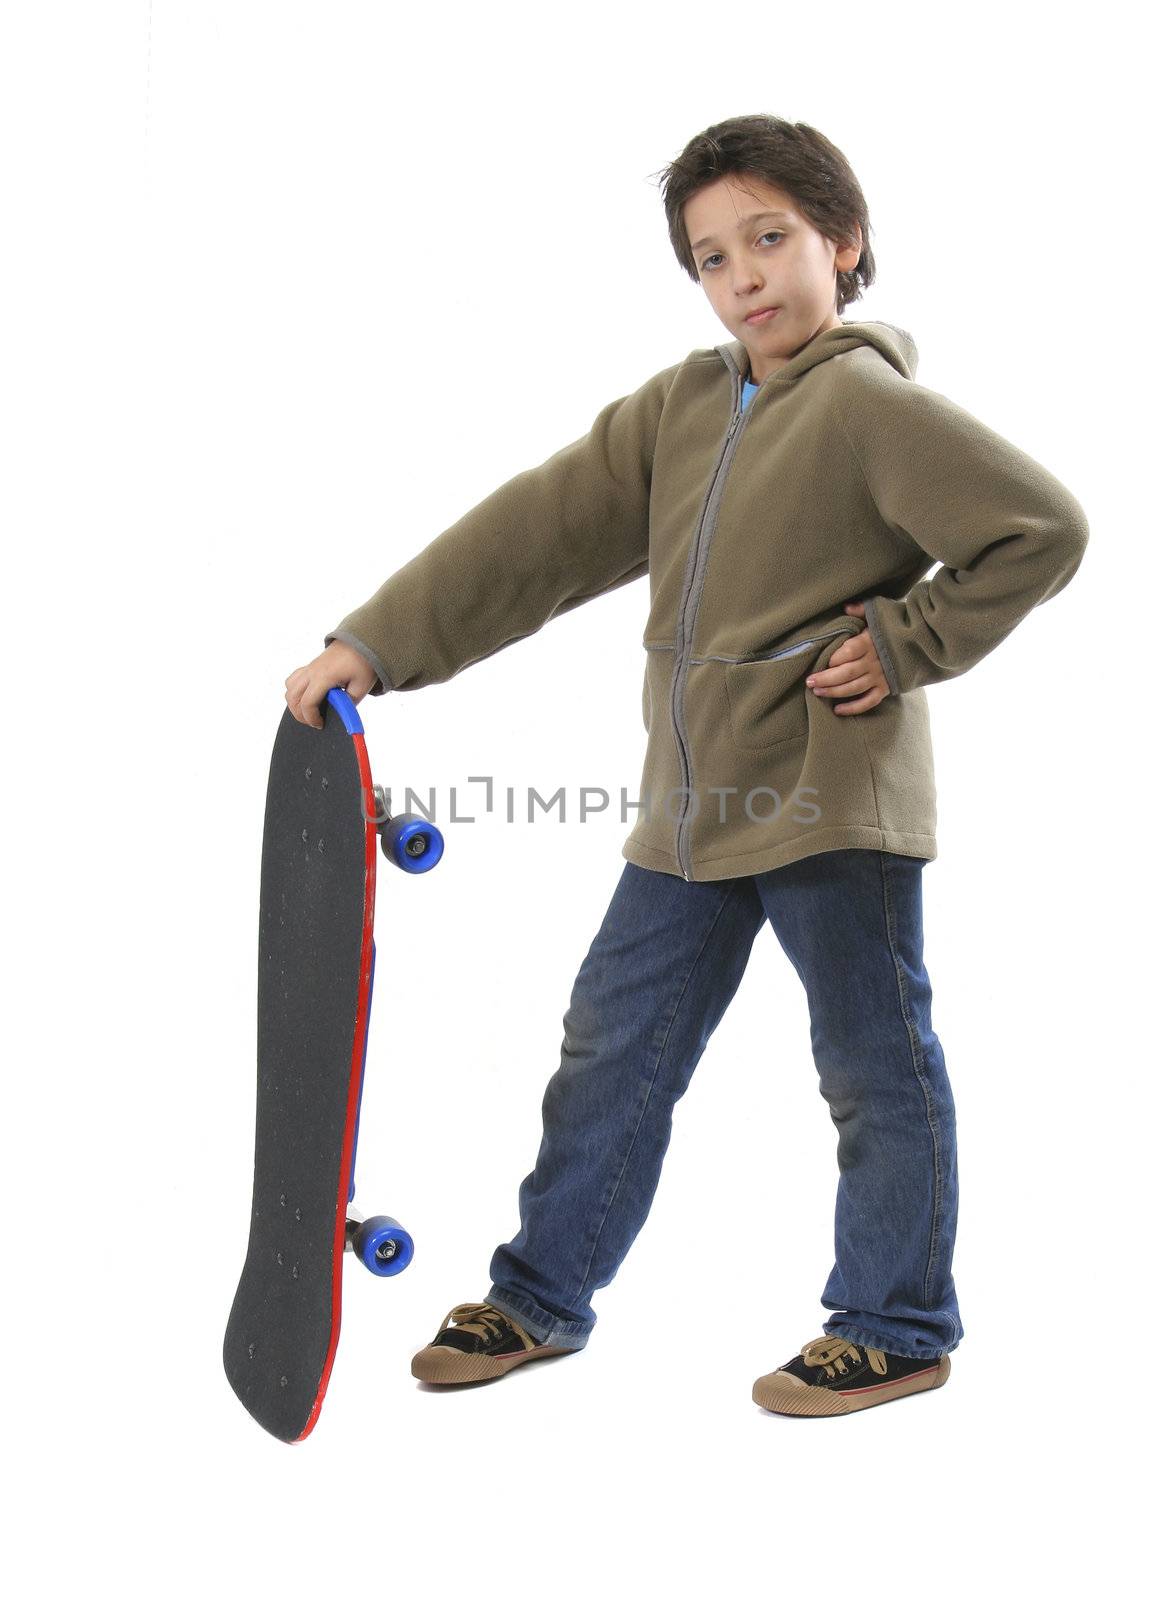 Cool skater boy by Erdosain